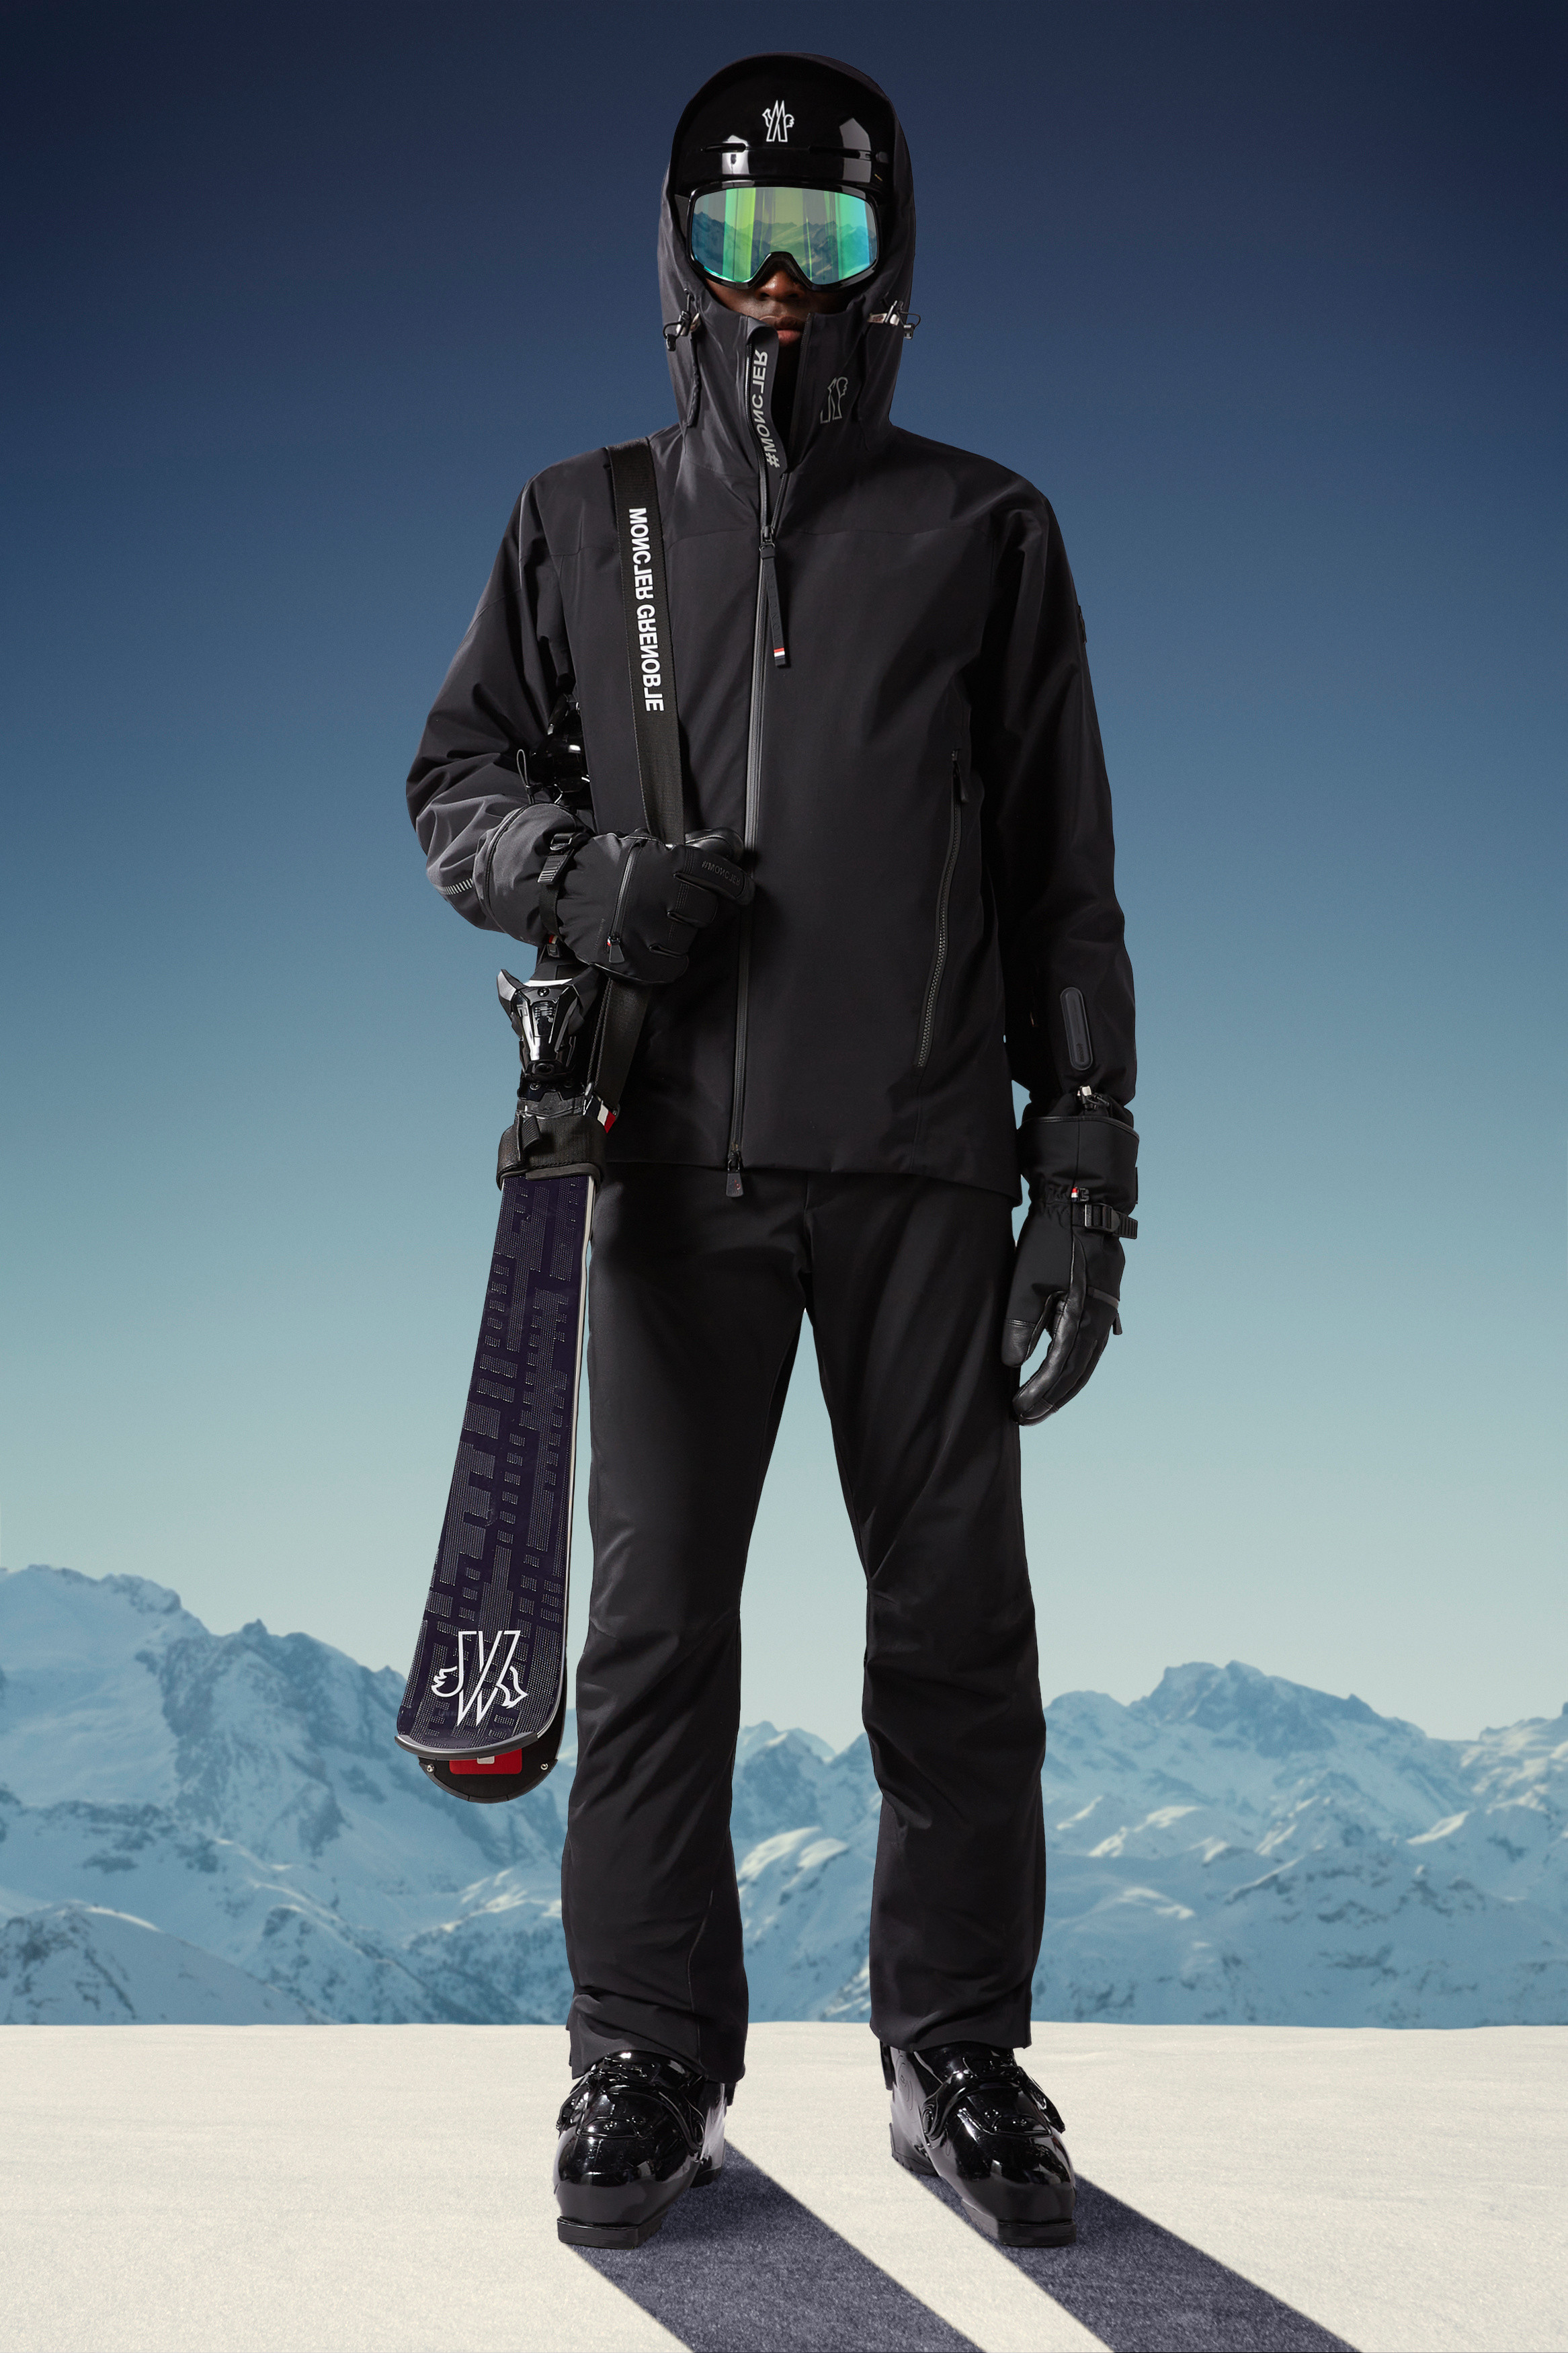 Black Ski Bands - Ski Accessories for Men